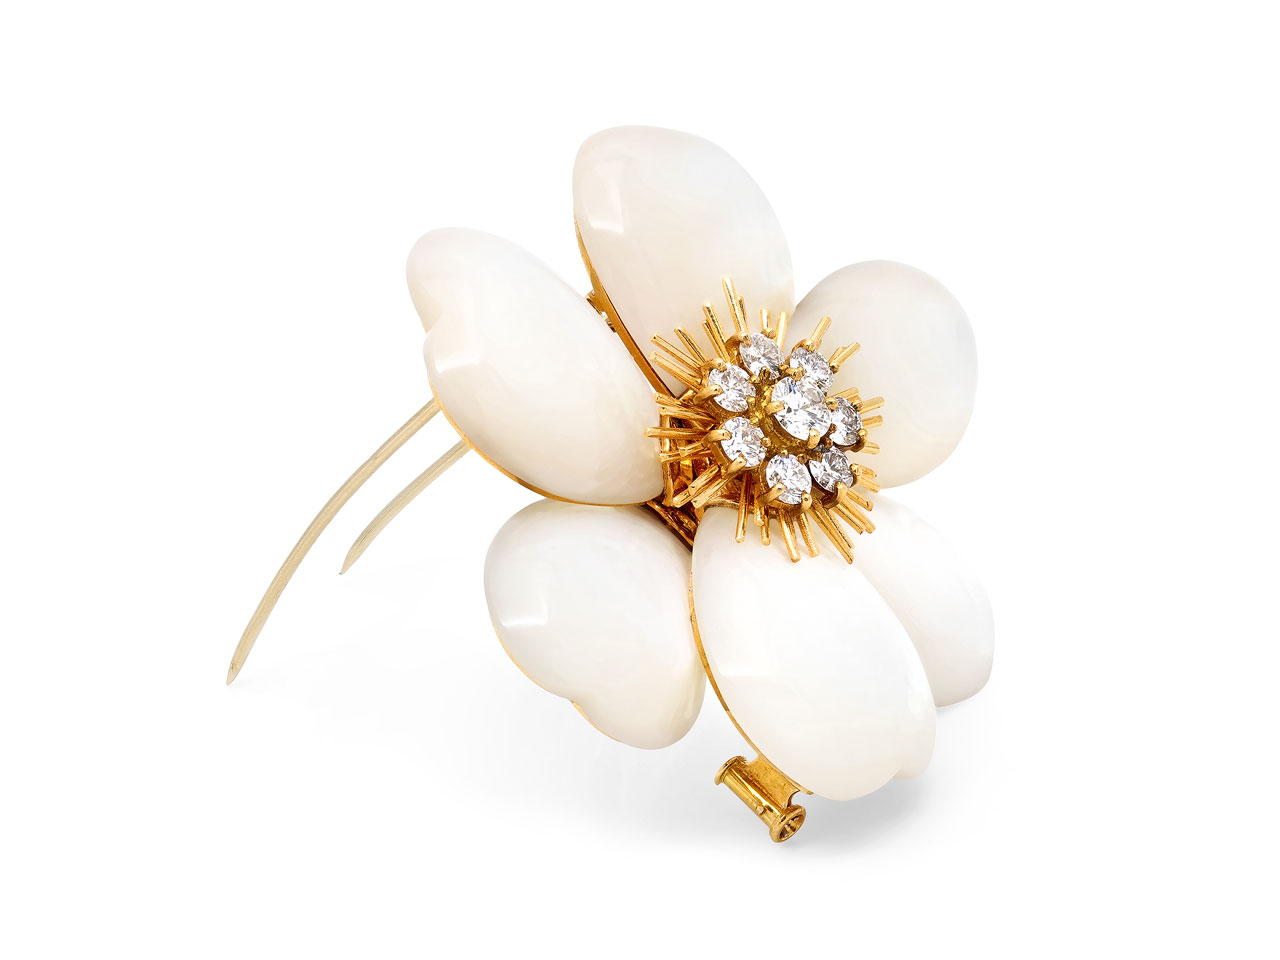 Van Cleef & Arpels Mother-of-Pearl and Diamond 'Rose de Noël' Brooch in 18K Gold